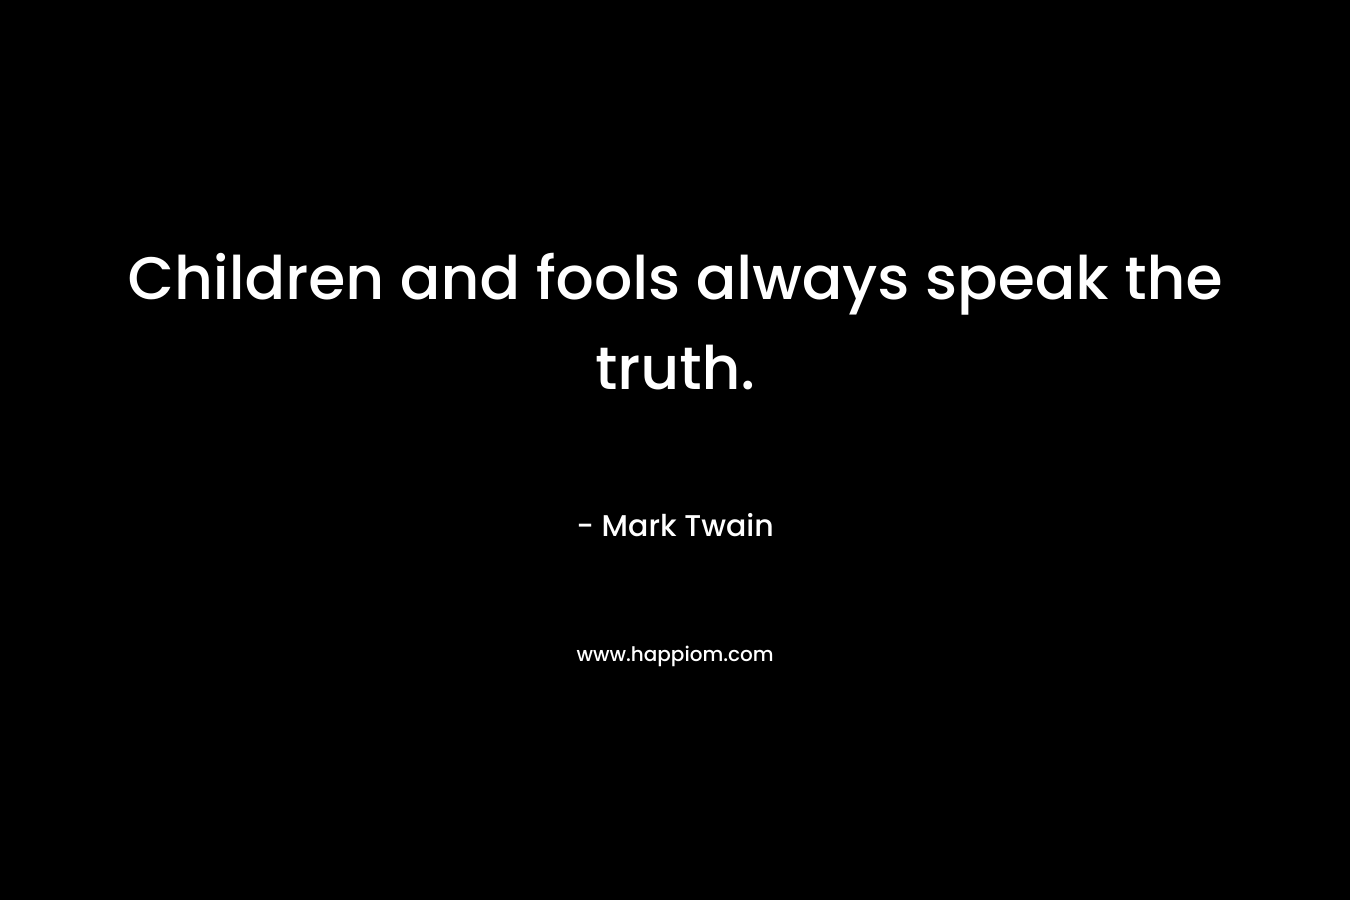 Children and fools always speak the truth.